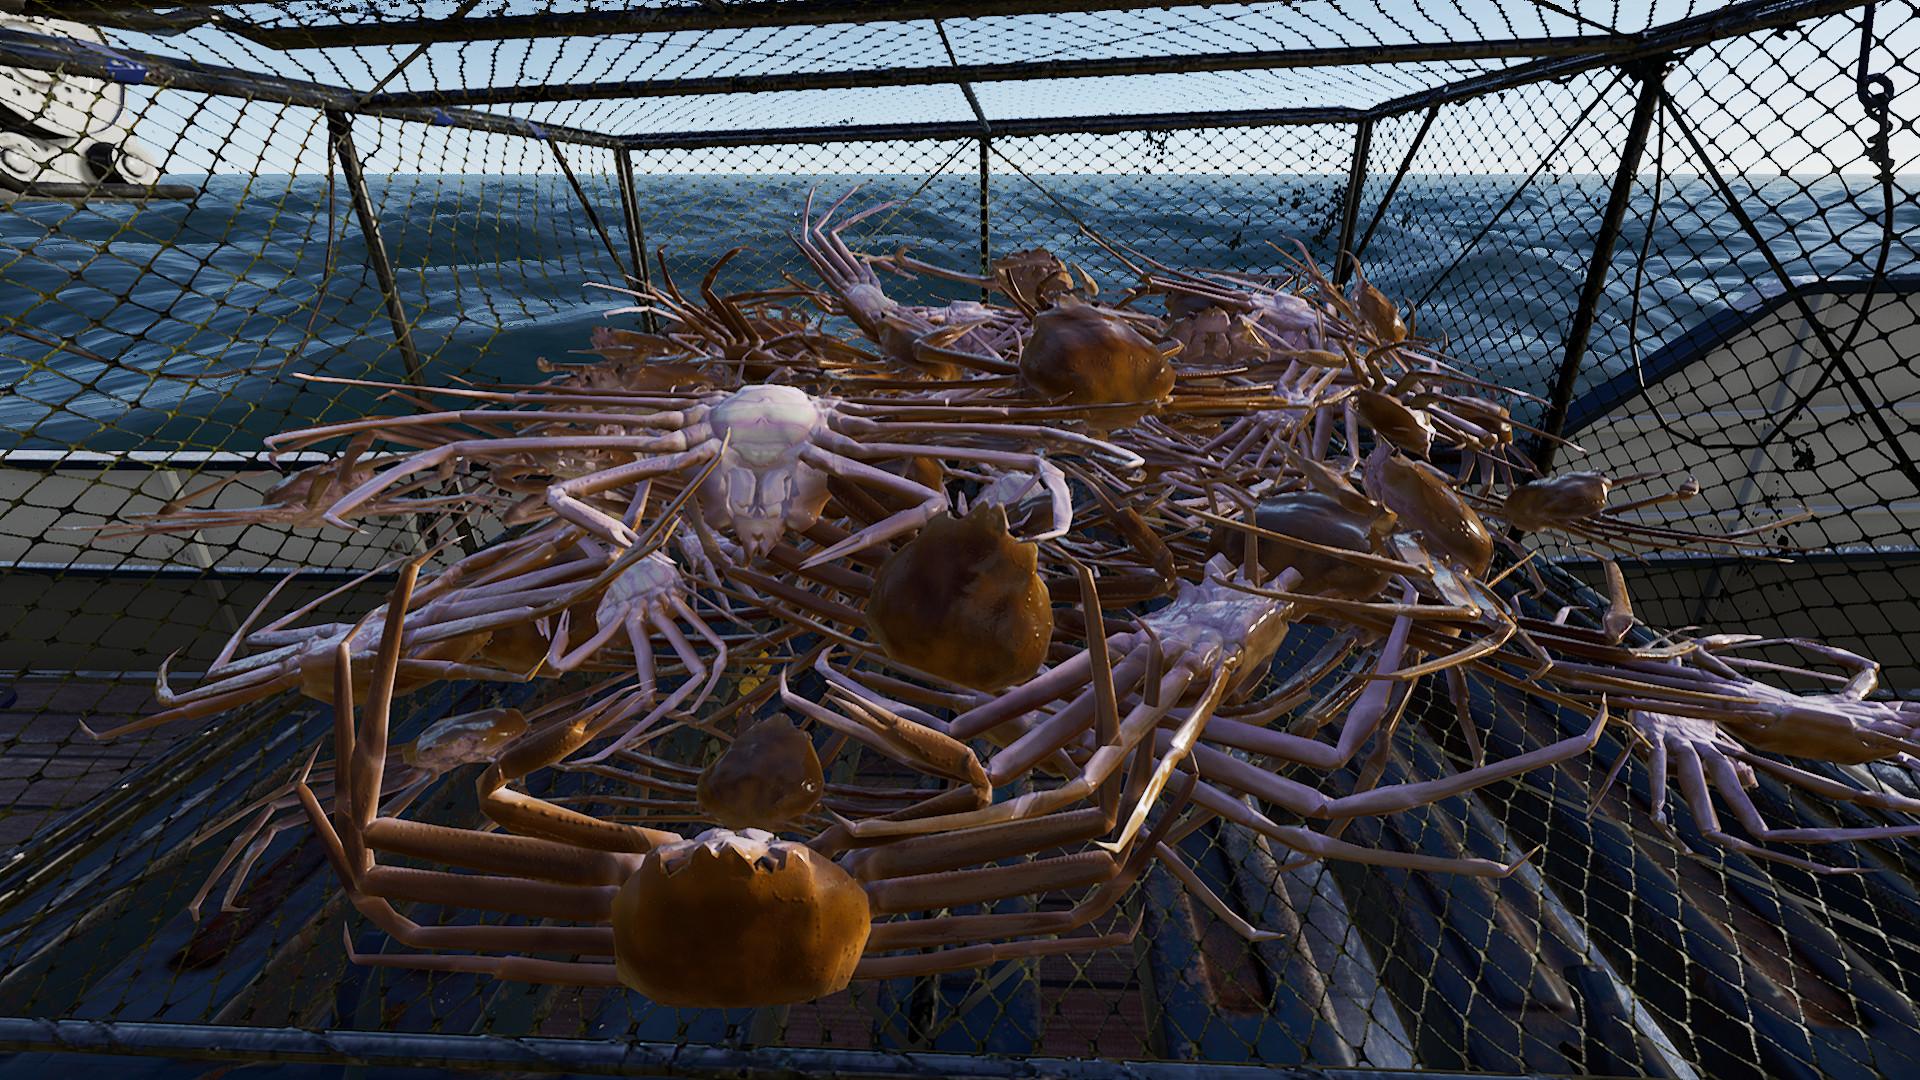 Screenshot №24 from game Fishing: North Atlantic - Enhanced Edition